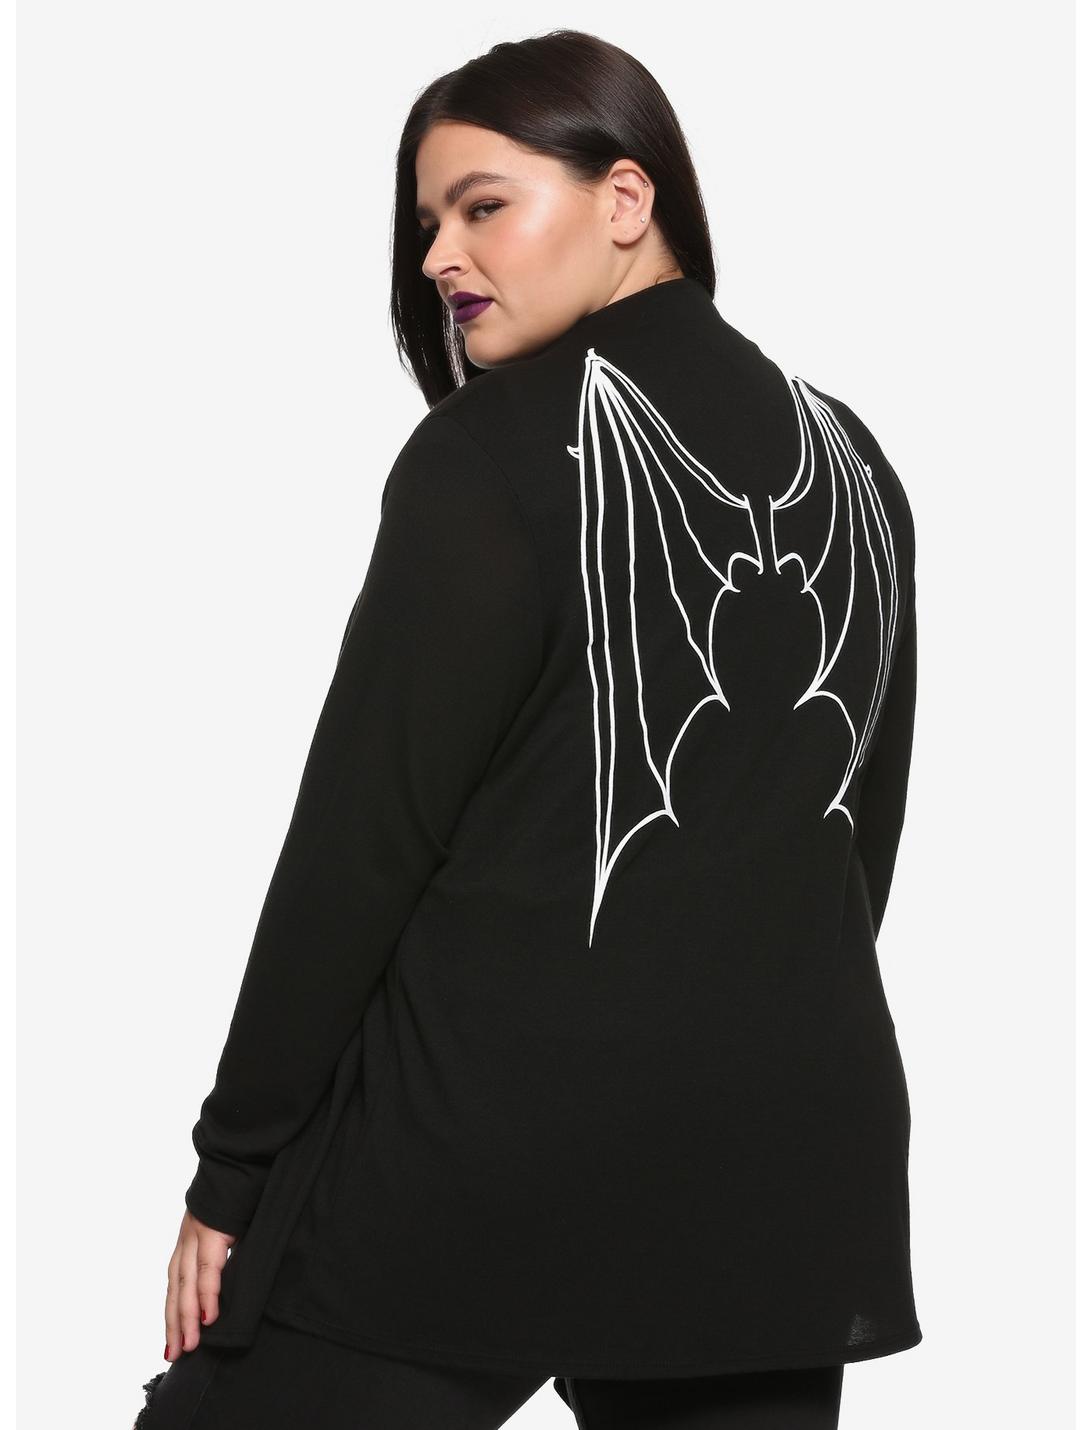 Bat Wings Back Girls Flyaway Cardigan Plus Size, BLACK, hi-res